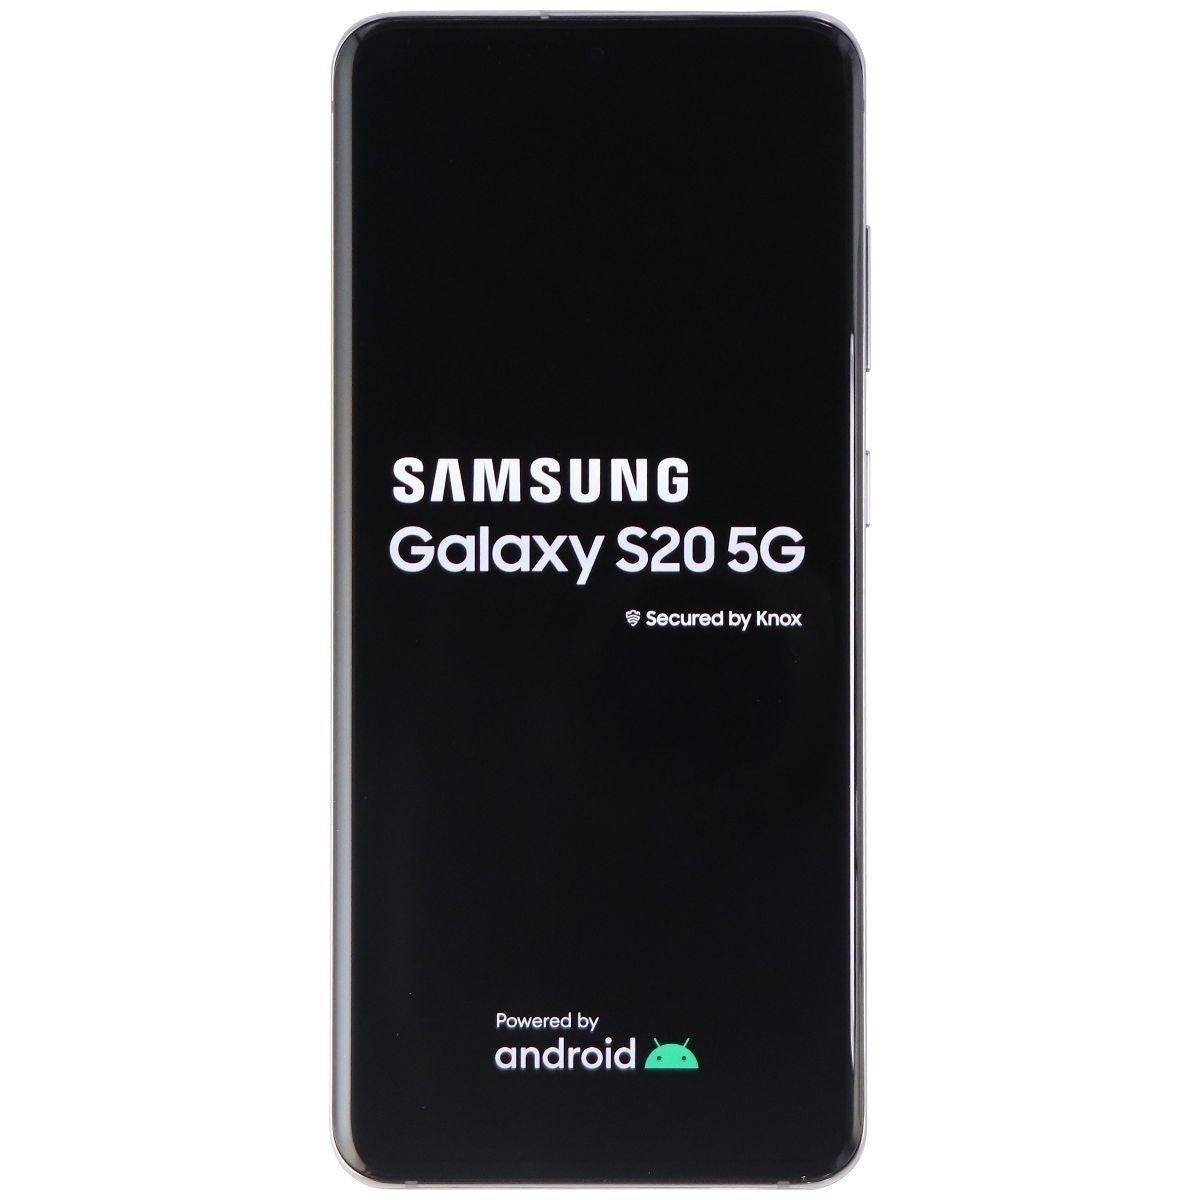 Samsung Galaxy S20 5G (6.2-in) (SM-G981U) Unlocked - 128GB/Cosmic Gray Cell Phones & Smartphones Samsung    - Simple Cell Bulk Wholesale Pricing - USA Seller